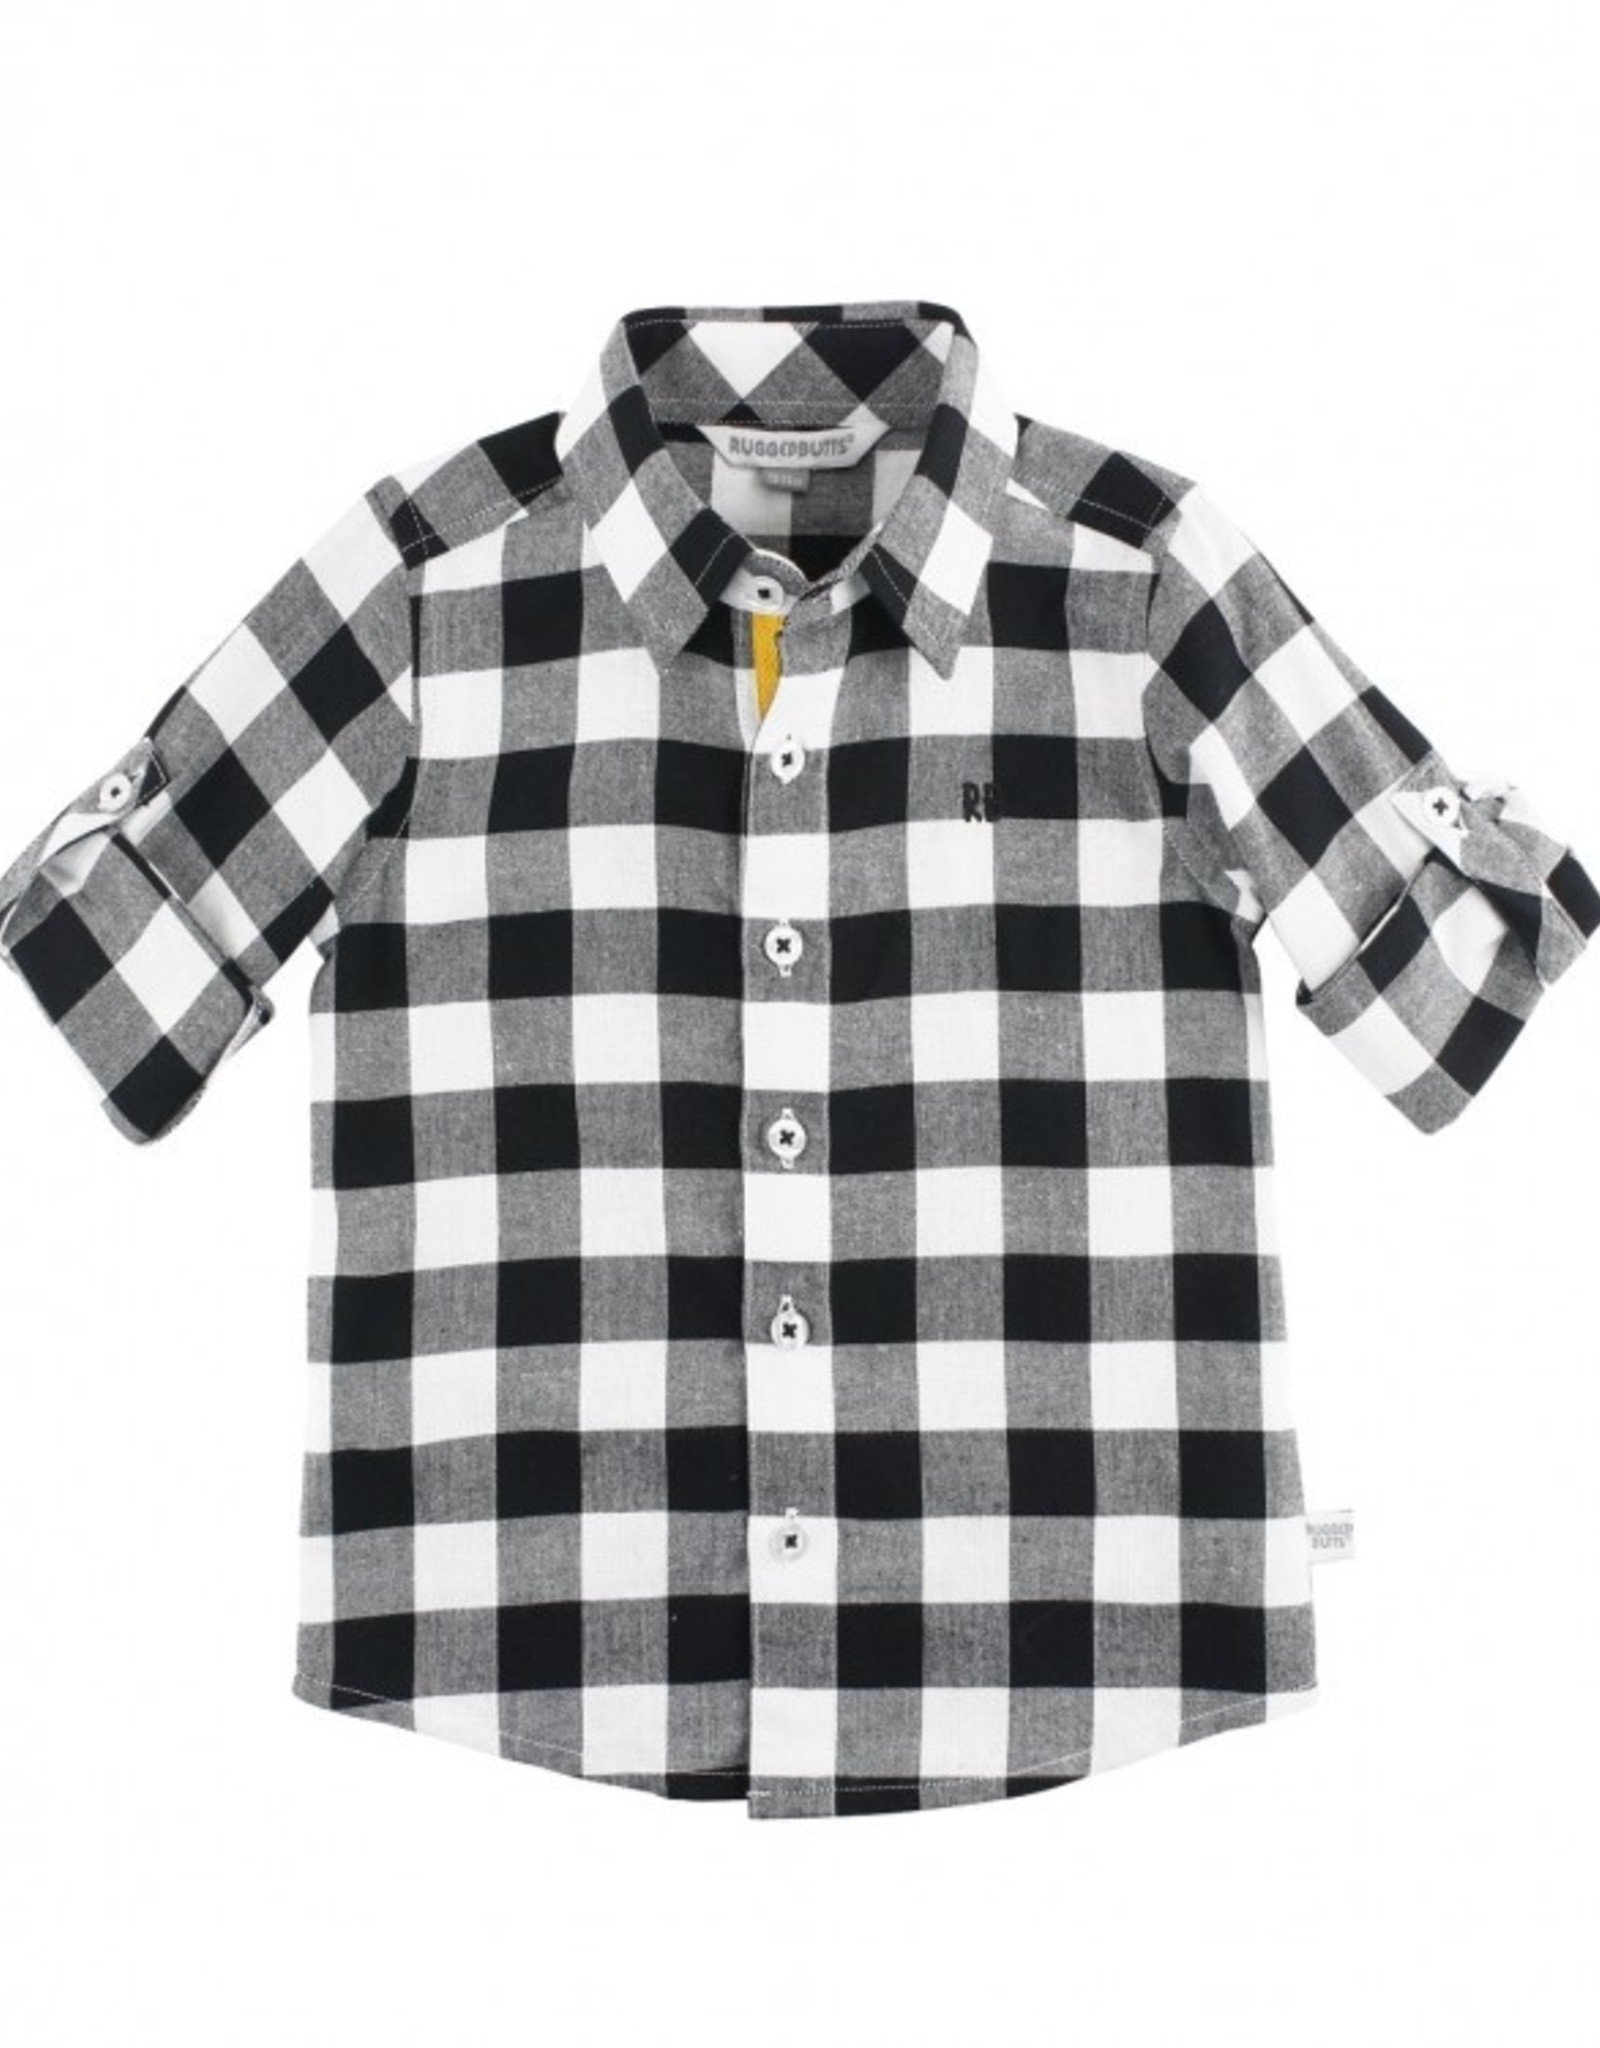 RuggedButts Black & White Plaid Button Down Shirt - Toddler